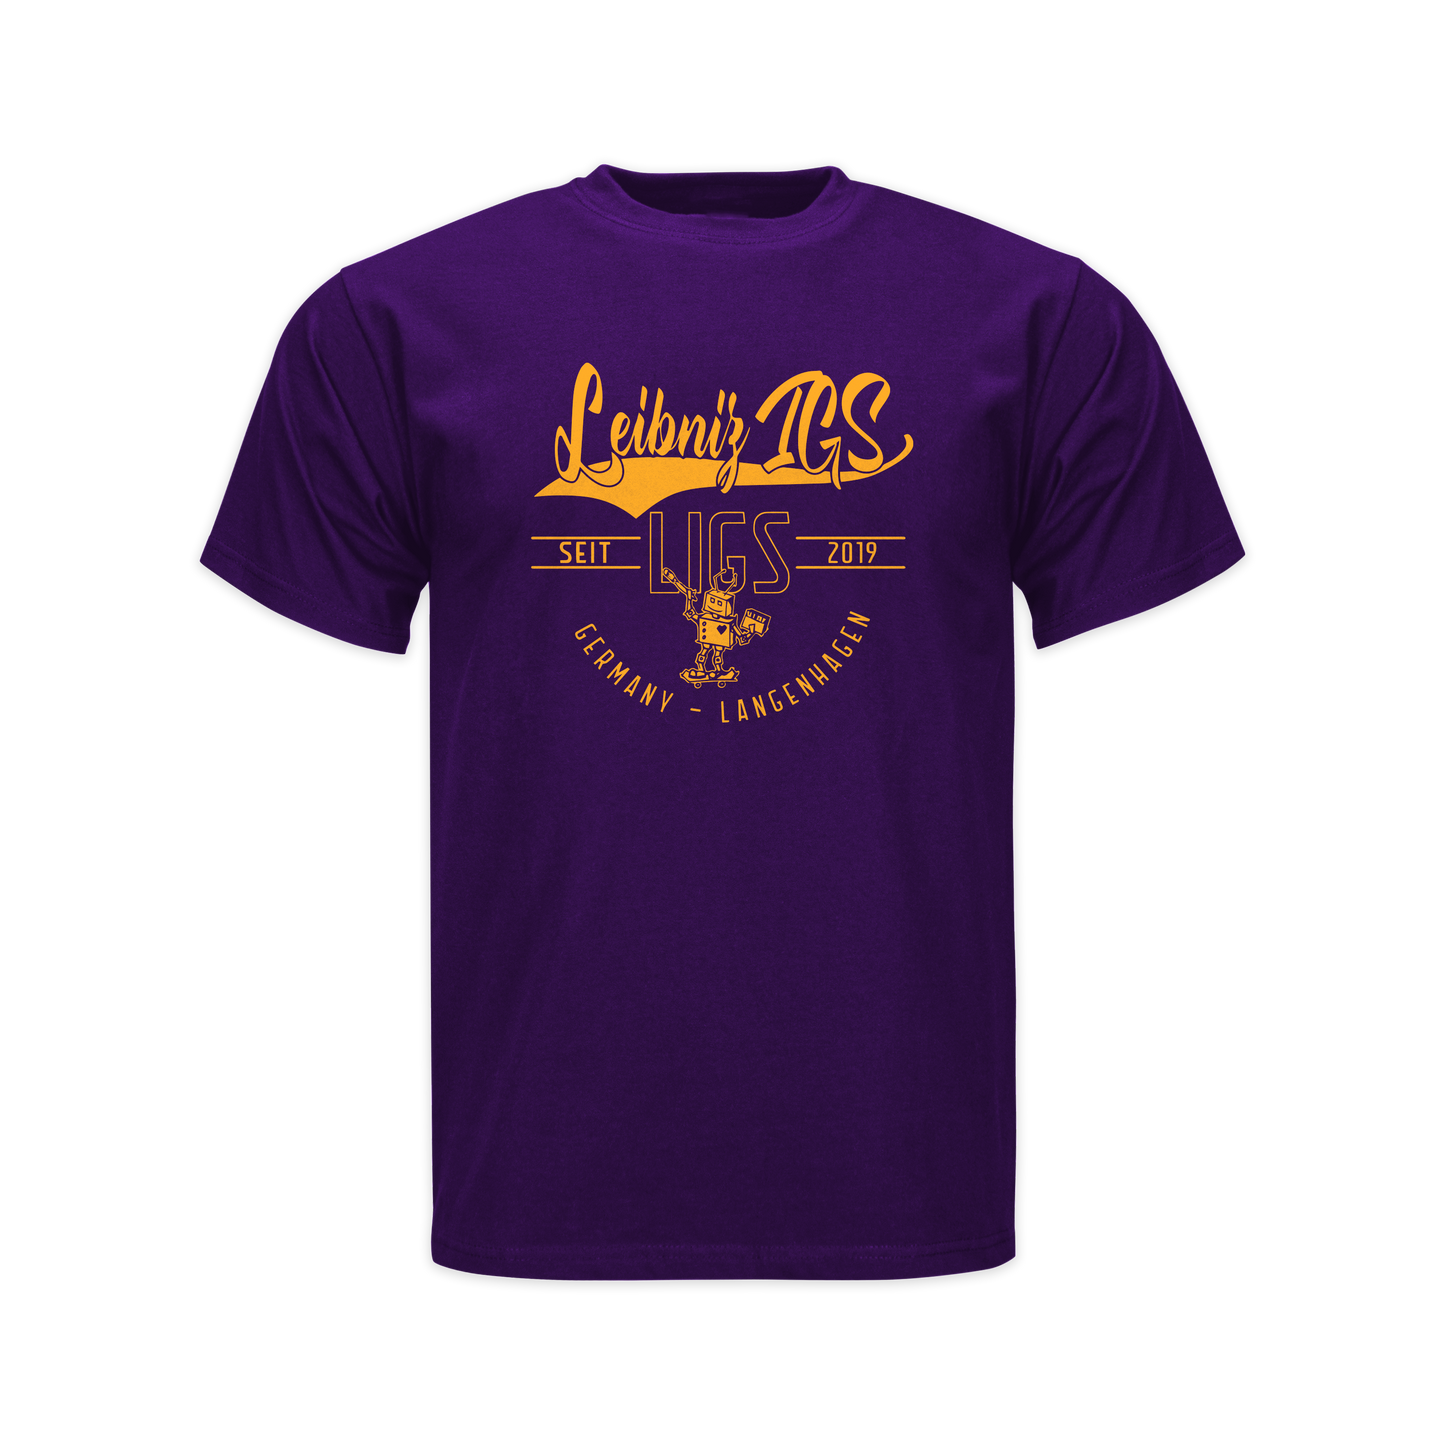 "Leibniz IGS" Kids T-Shirt purple edit.